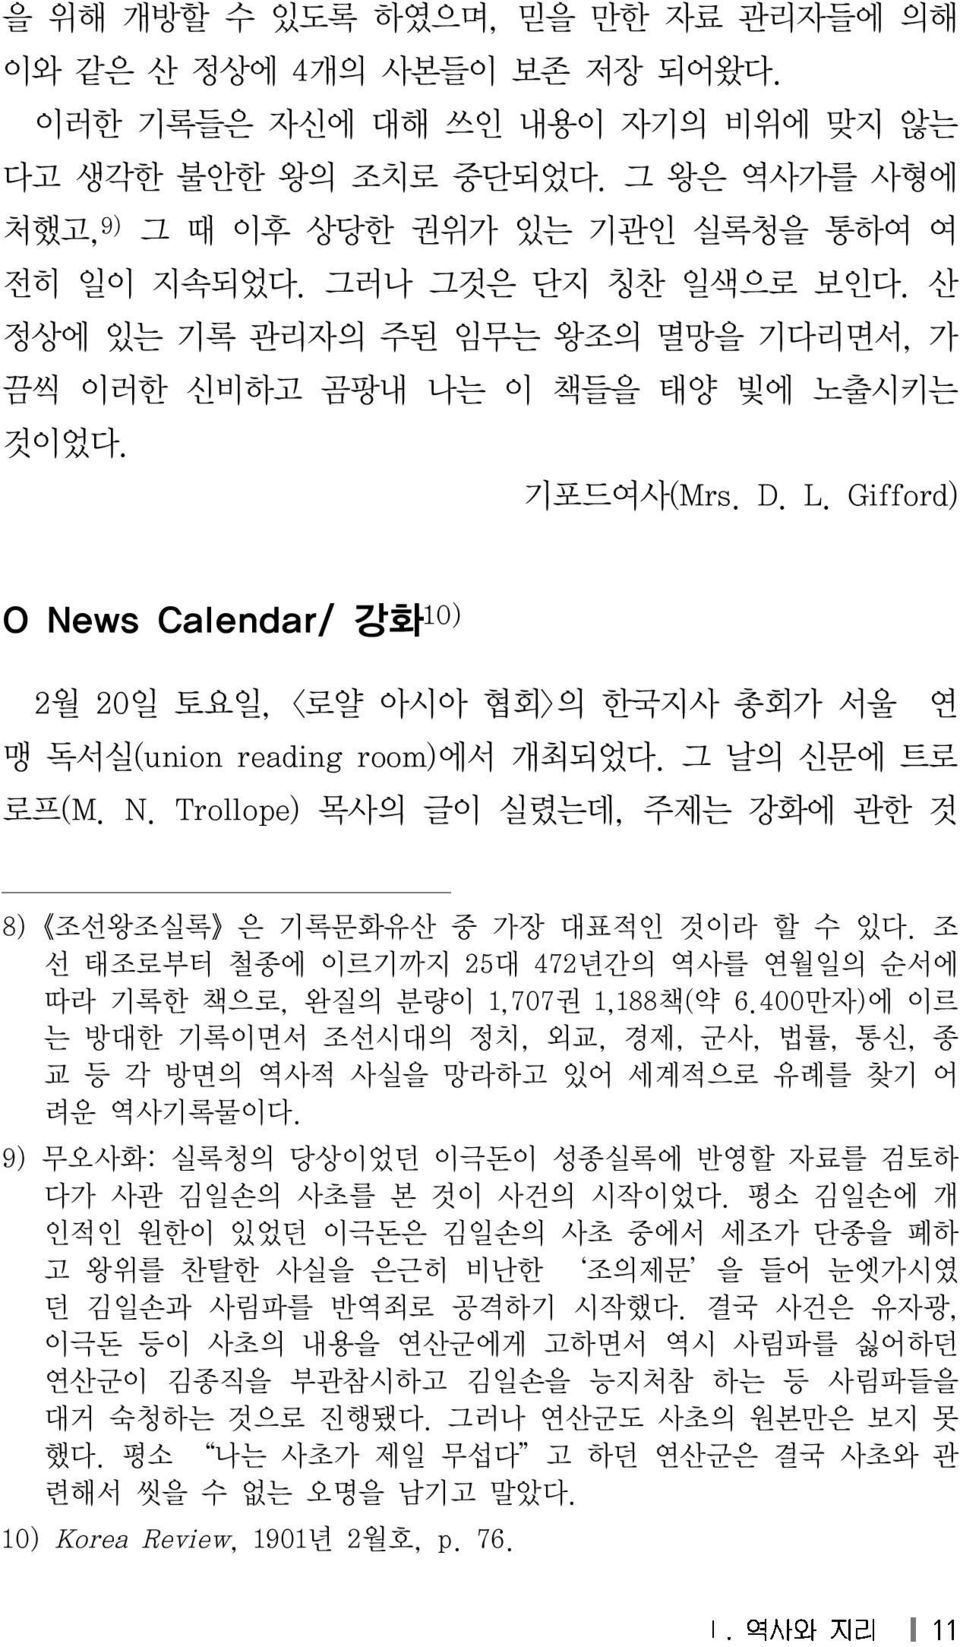 Gifford) O News Calendar/ 강화10) 2월 20 일 토요일, < 로얄 아시아 협회> 의 한국지사 총회가 서울 연 맹 독서실 (union reading room) 에서 개최되었다. 그 날의 신문에 트로 로프(M. N. Trollope) 목사의 글이 실렸는데, 주제는 강화에 관한 것 8) 조선왕조실록 은 기록문화유산 중 가장 대표적인 것이라 할 수 있다.